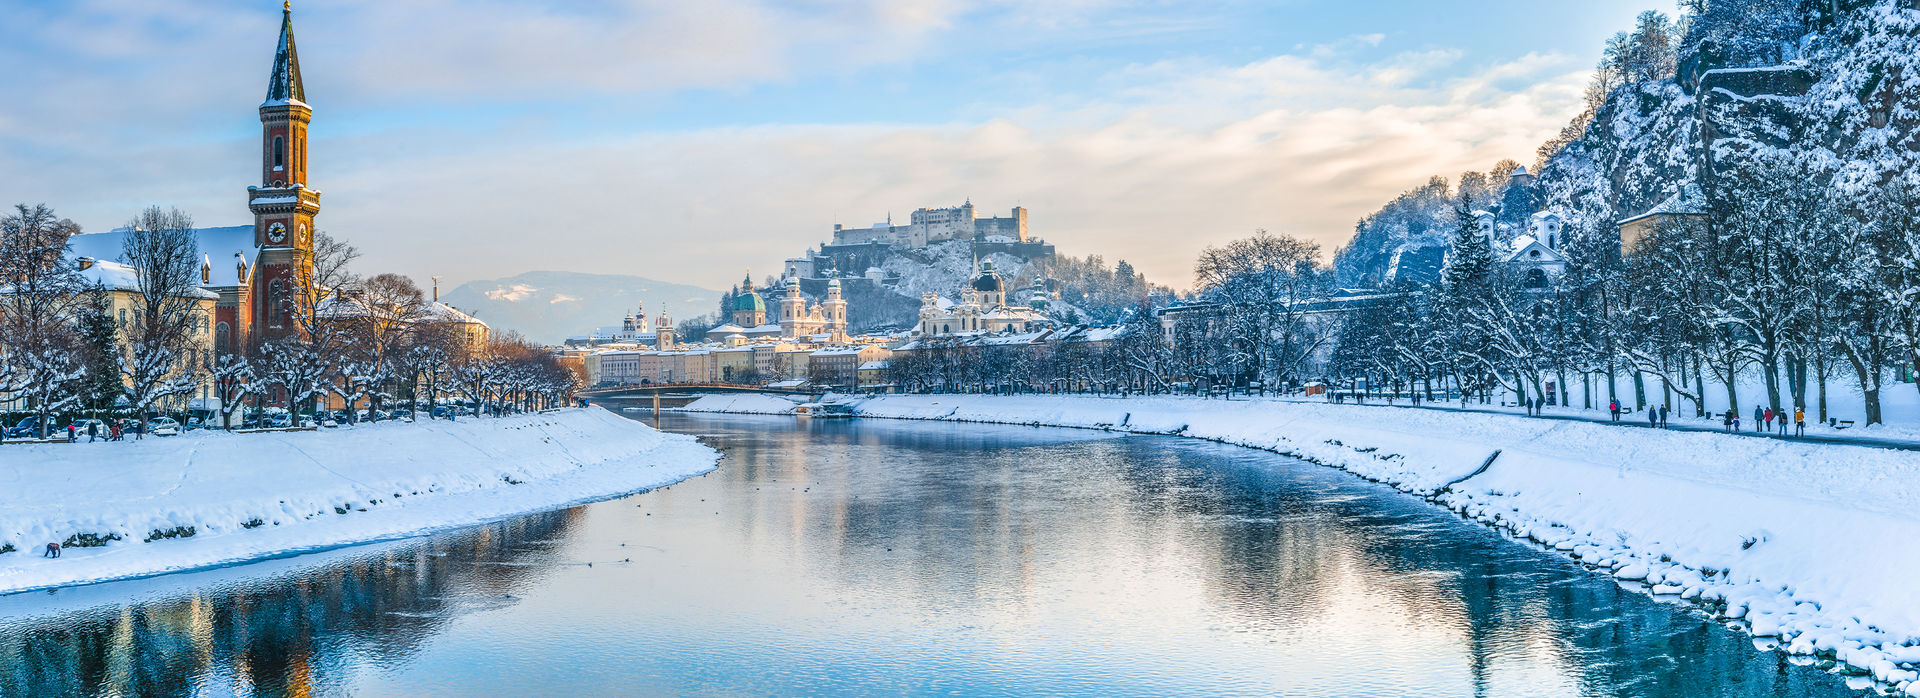 Season’s Greetings from Salzburg